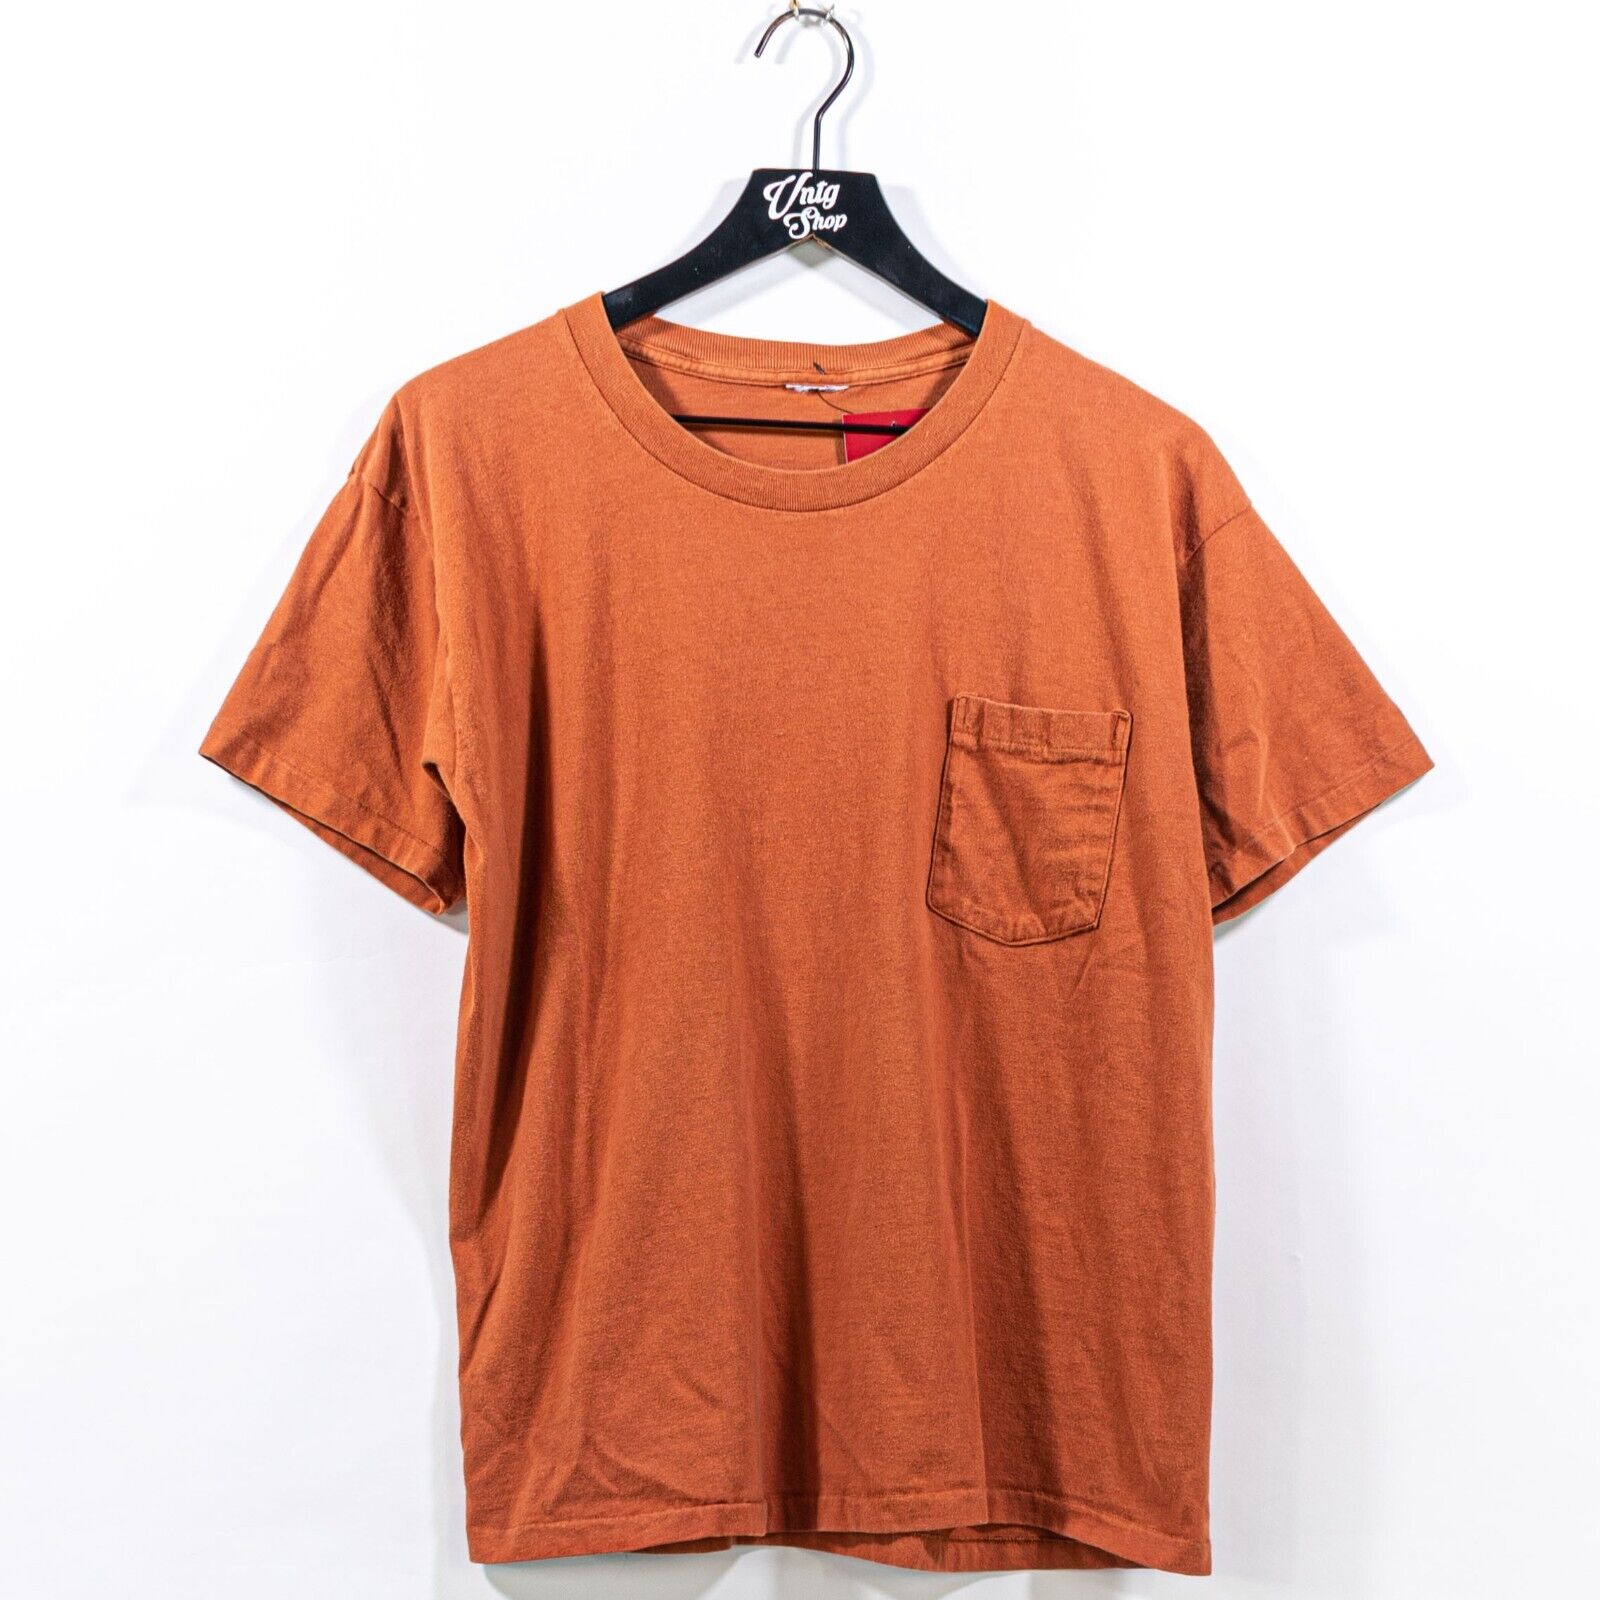 Blank Pocket T-Shirt Medium VTG 80s 90s Single Stitch Grunge Skater Streetwear